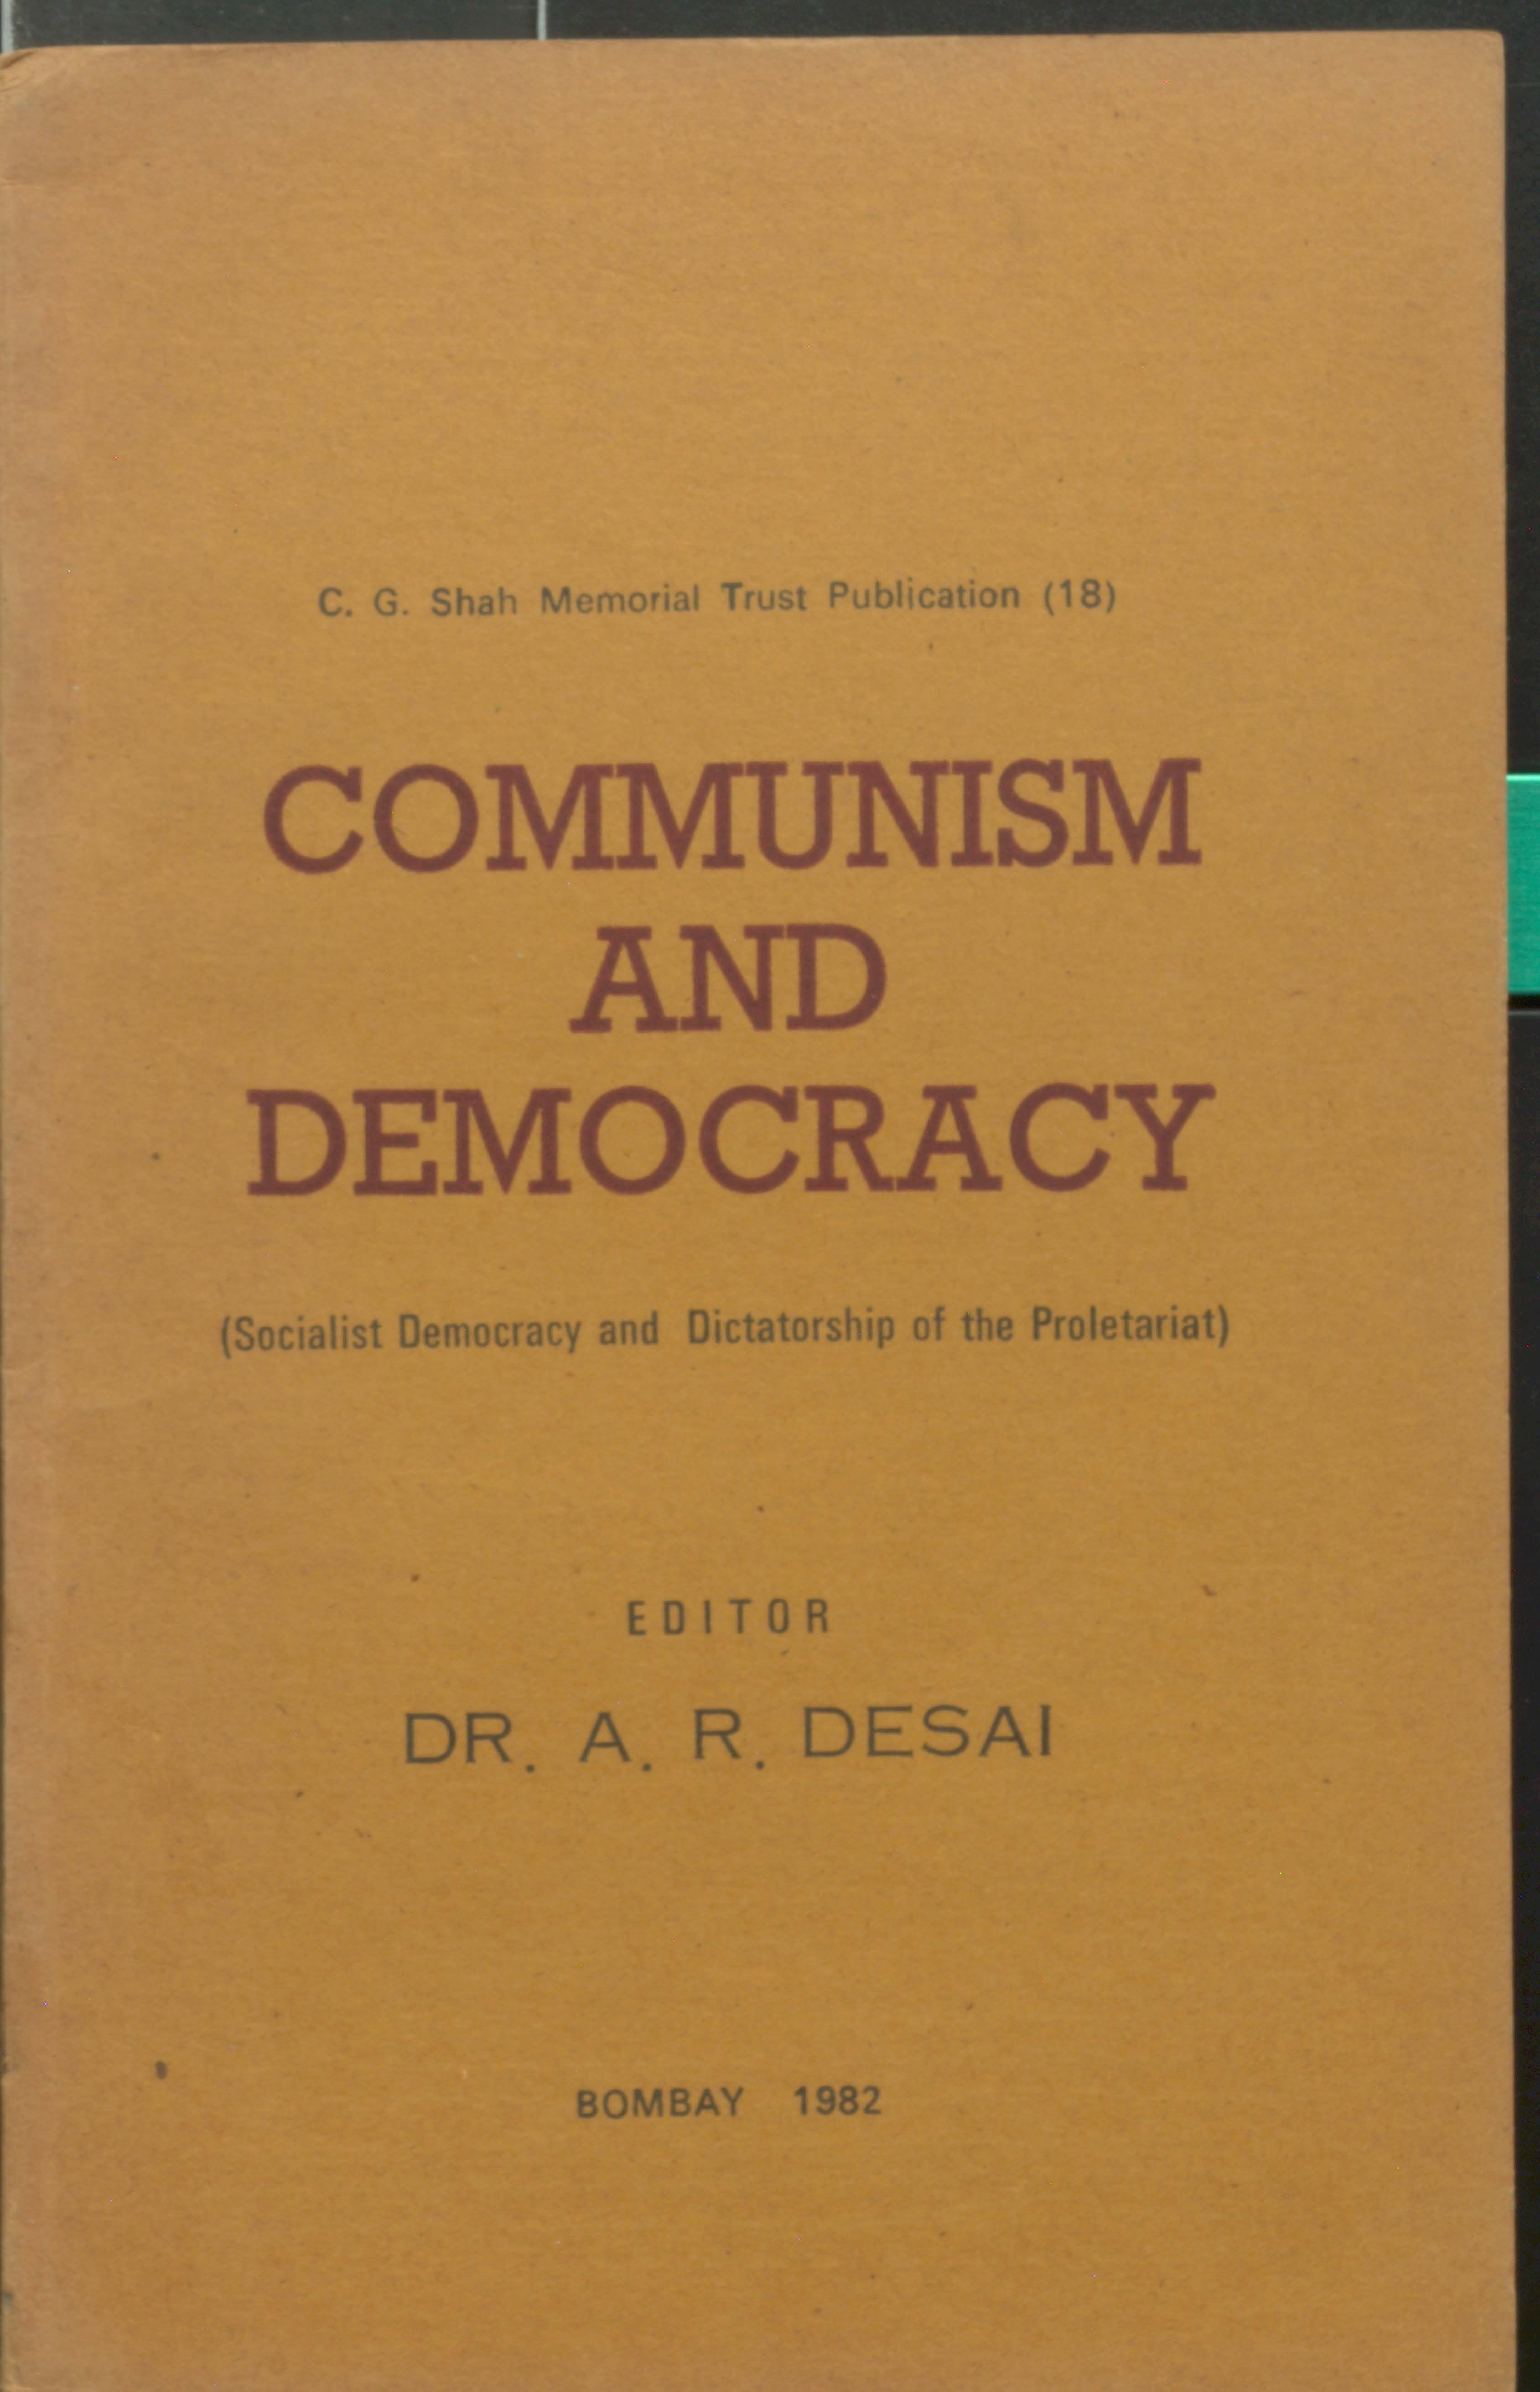 Communism and democracy